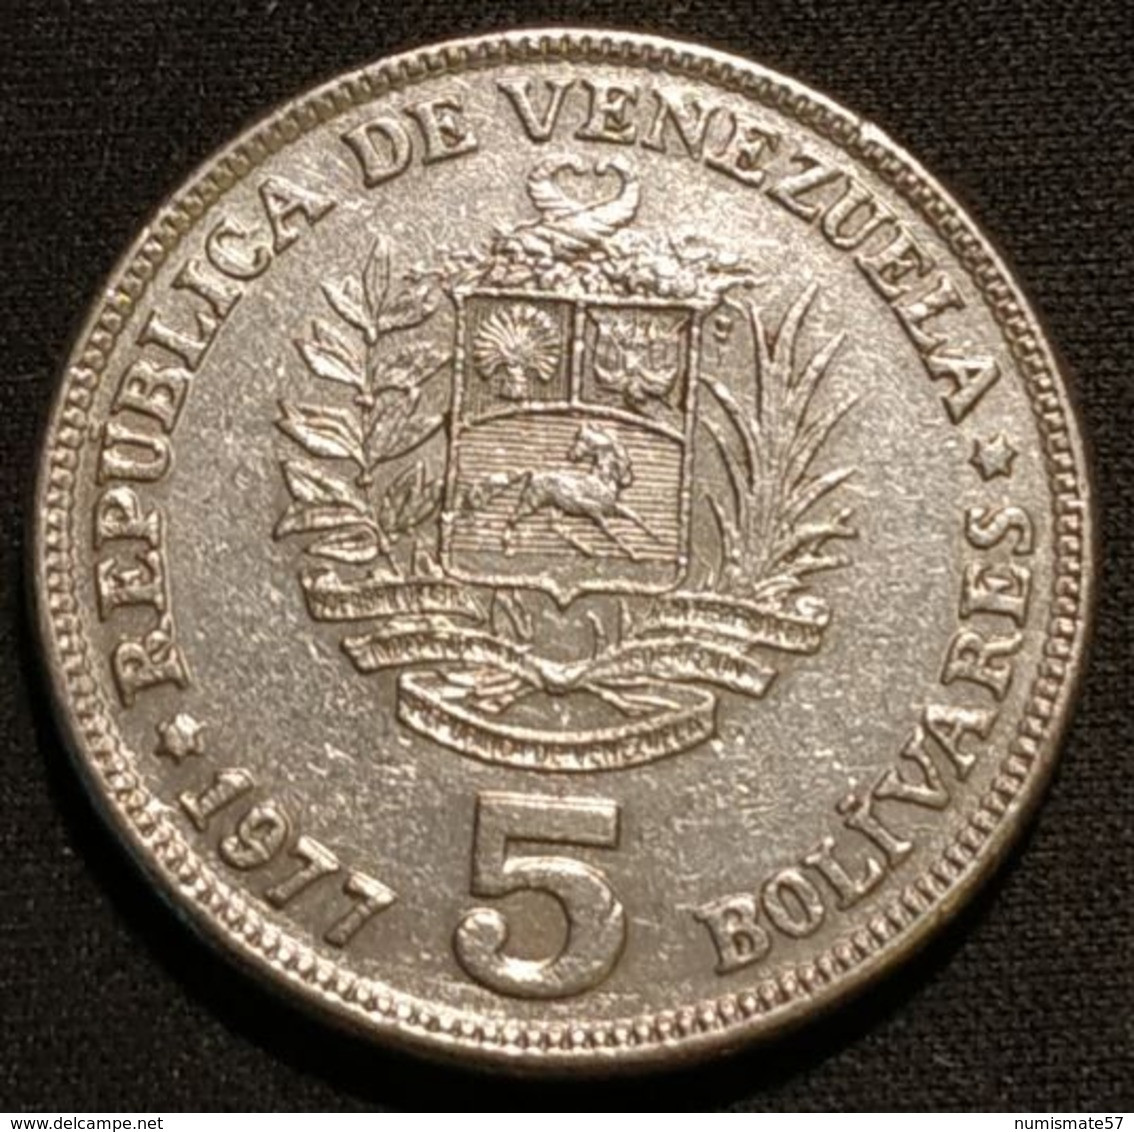 VENEZUELA - 5 BOLIVARES 1977 - KM 53.1 - Etoile à 6 Branches - ( Bolivar - Bolivars ) - Venezuela